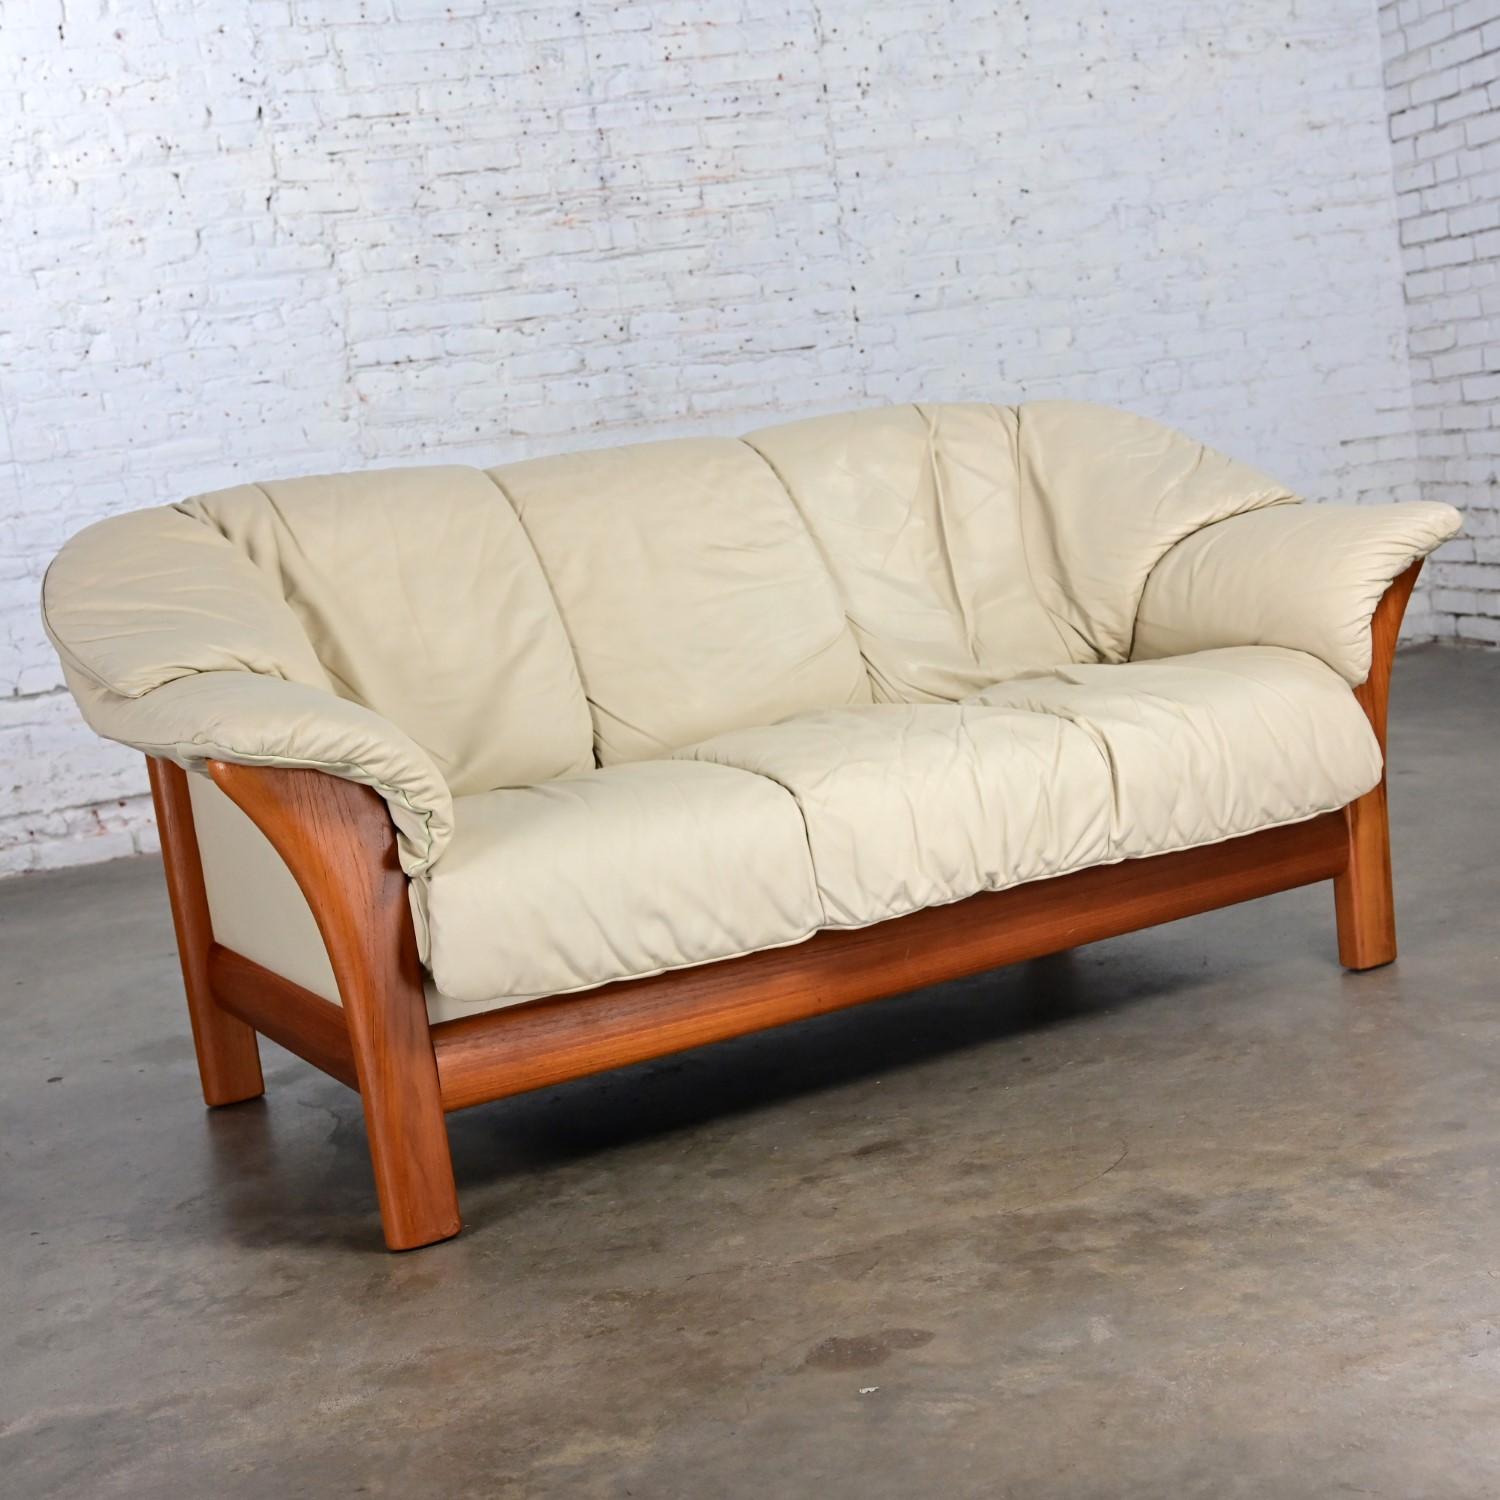 Norwegian Scandinavian Modern Teak & Off White Leather Small Sofa Attributed to Ekornes For Sale